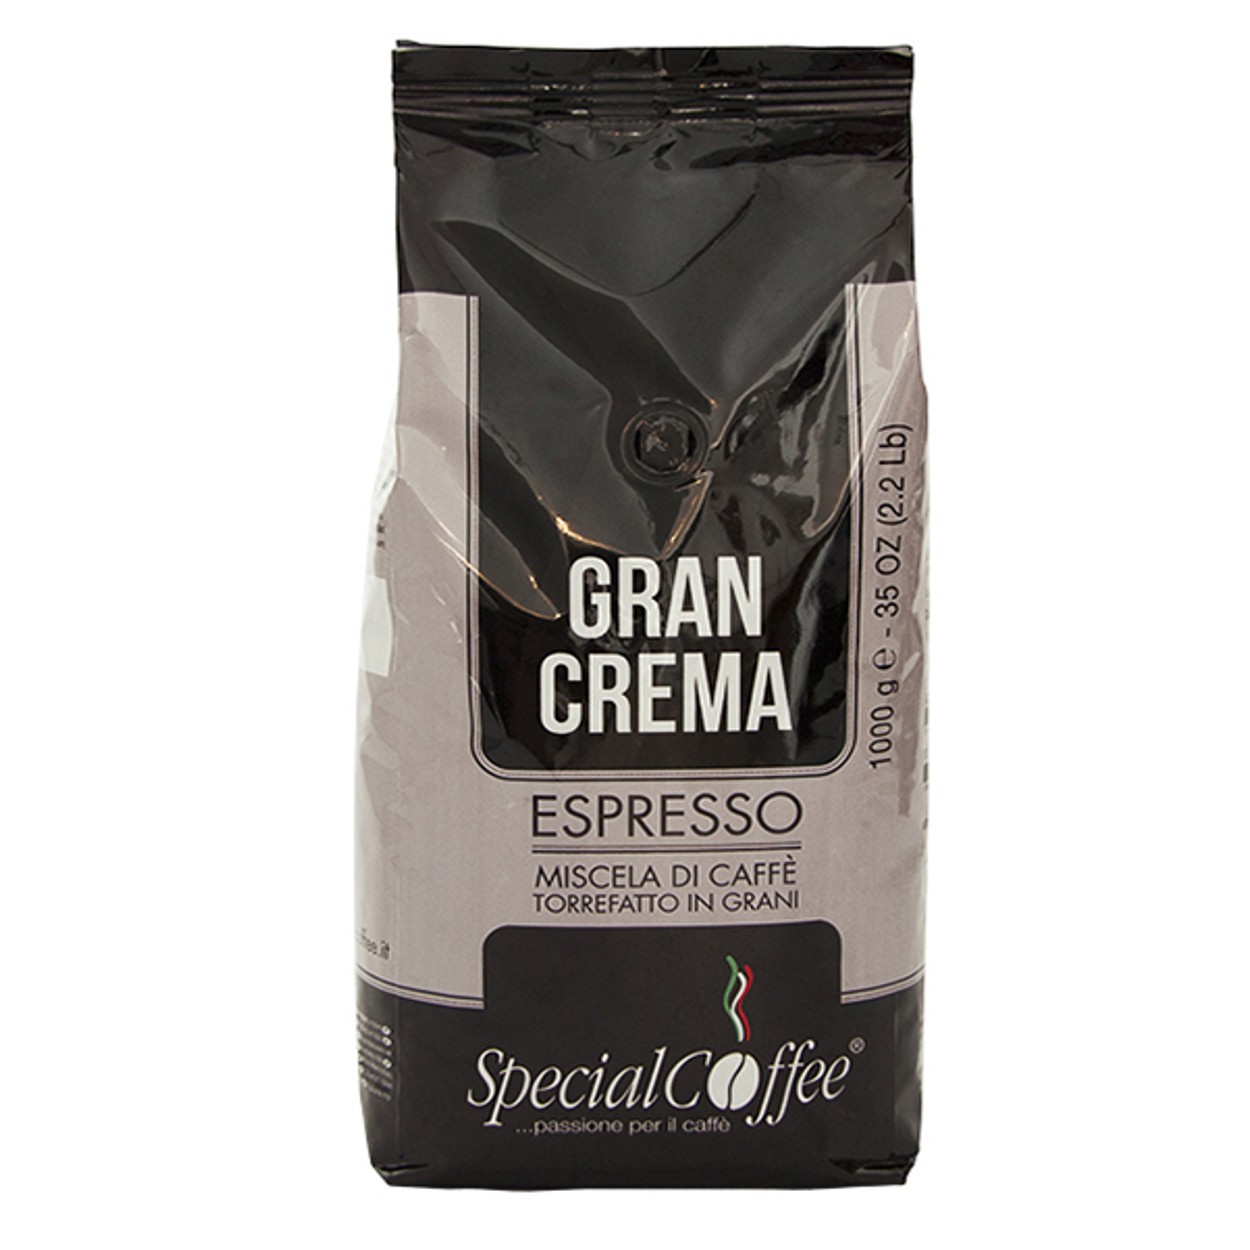 Кофе Special Coffe Gran crema 1 кг.jpg